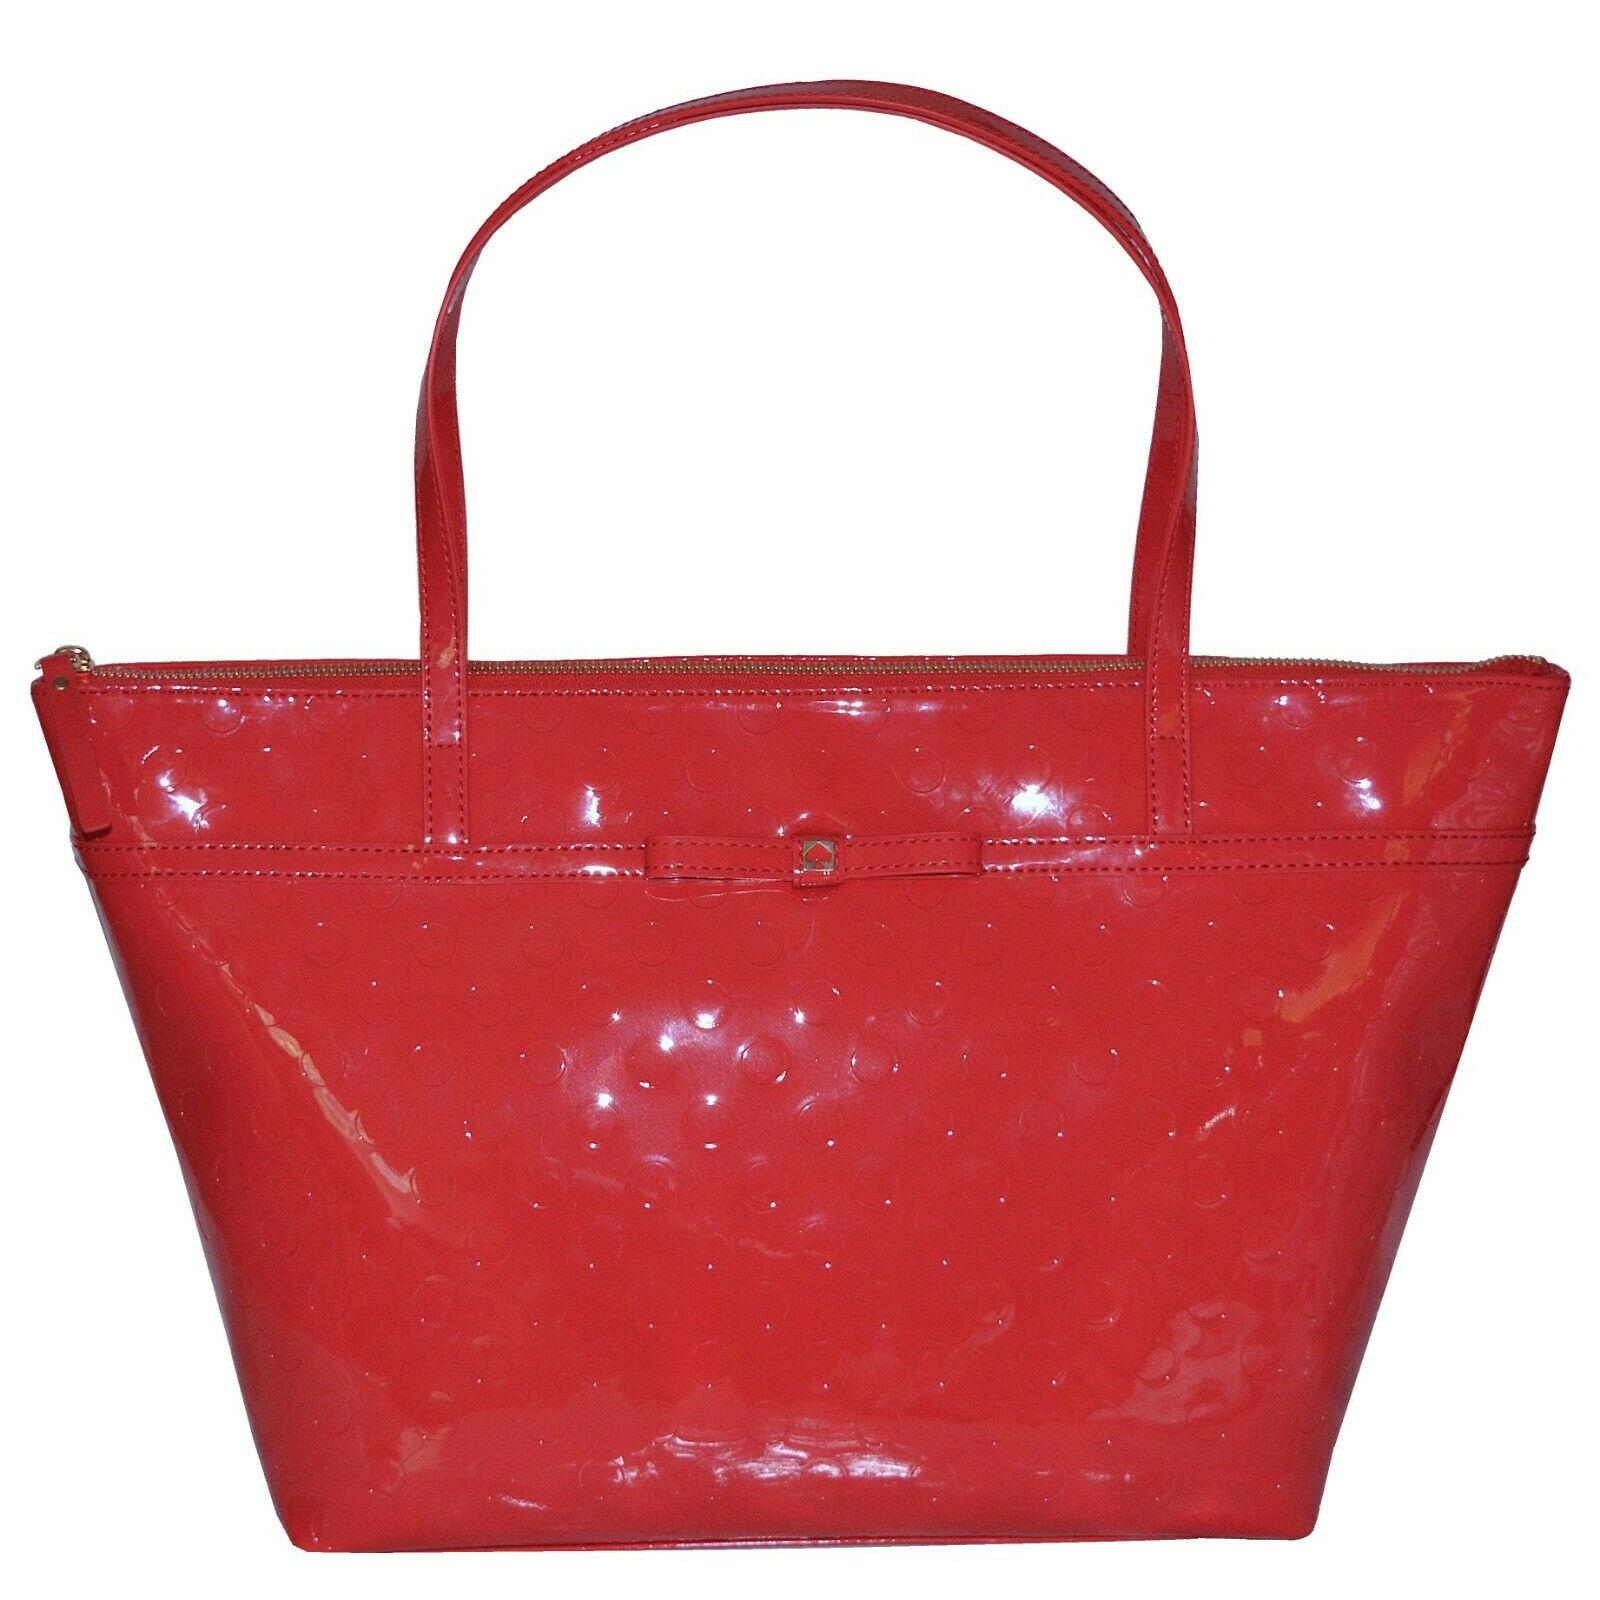 Kate Spade Sophie Large Tote Bag Womens Handbag Purse Polka Dot Chili Red